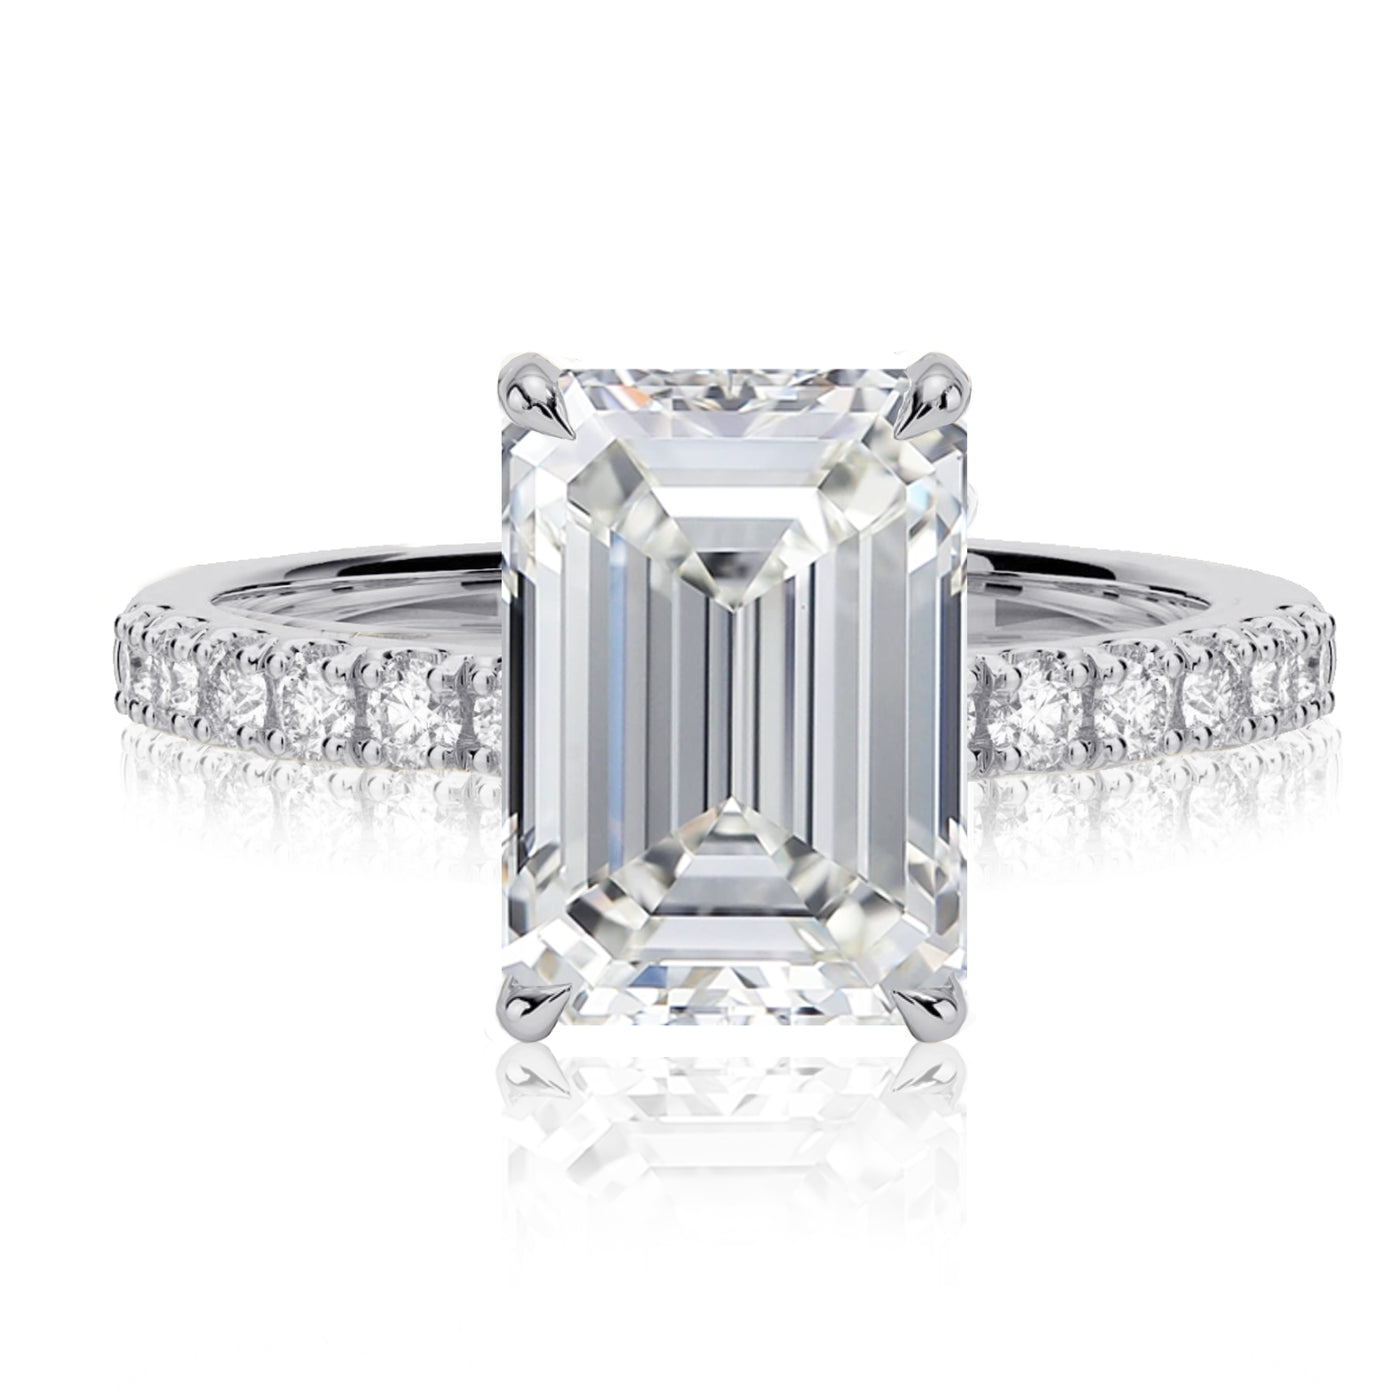 18K White Gold Emerald Cut Diamond Hidden Halo Pave' Engagement Ring